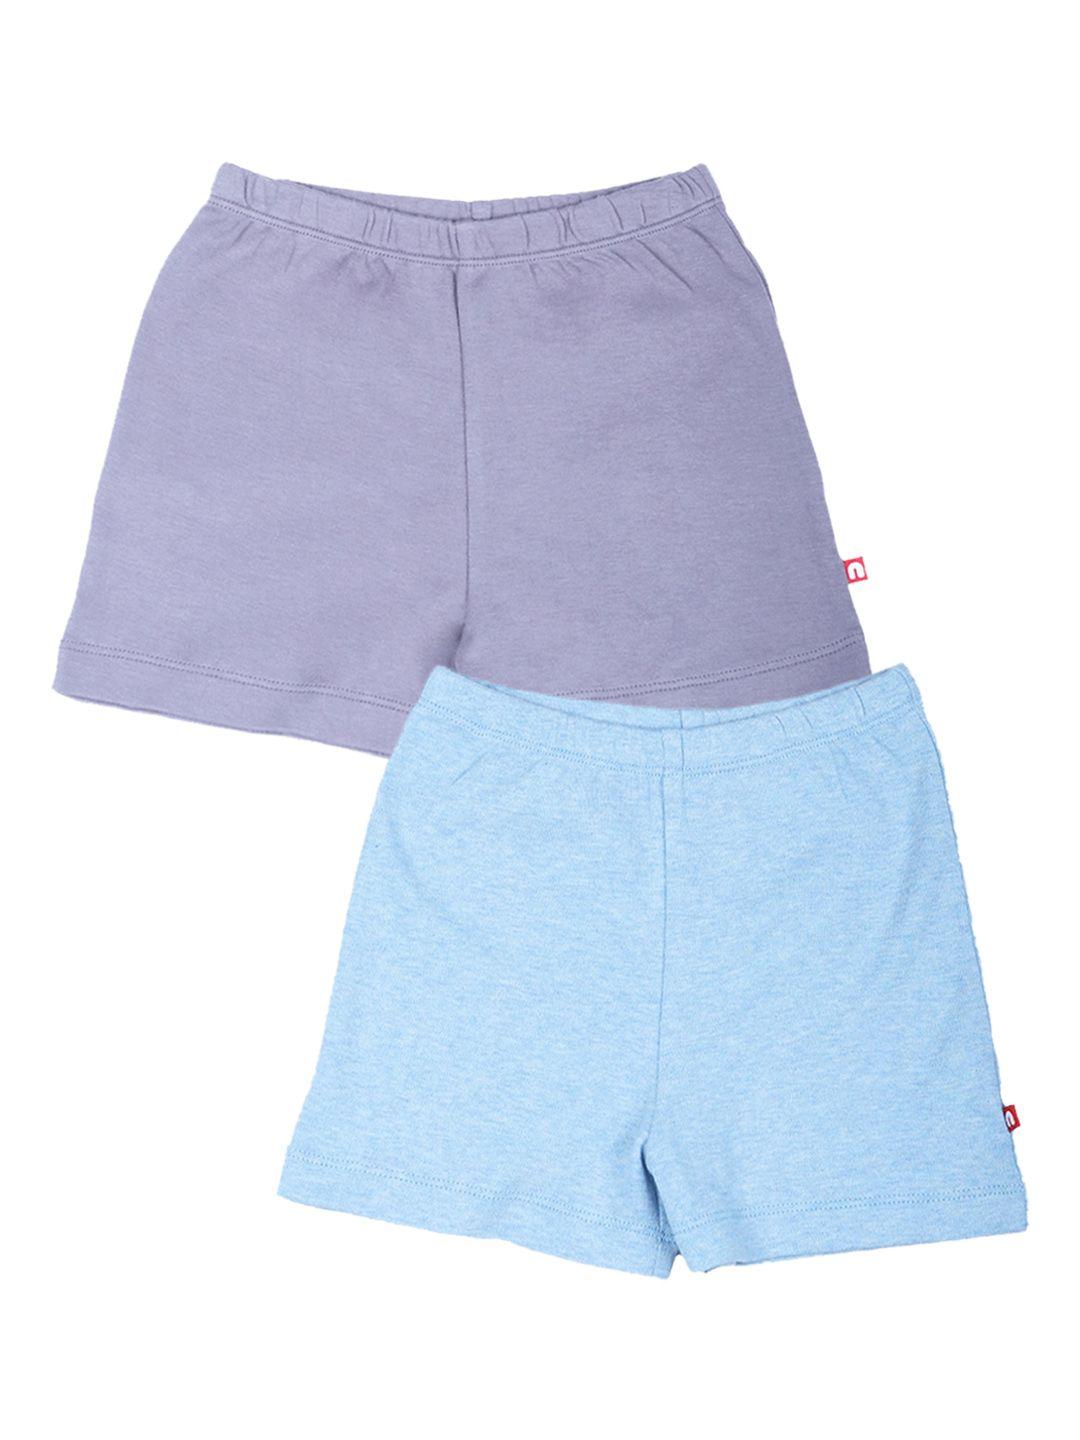 nino bambino boys pack of 2 organic cotton shorts